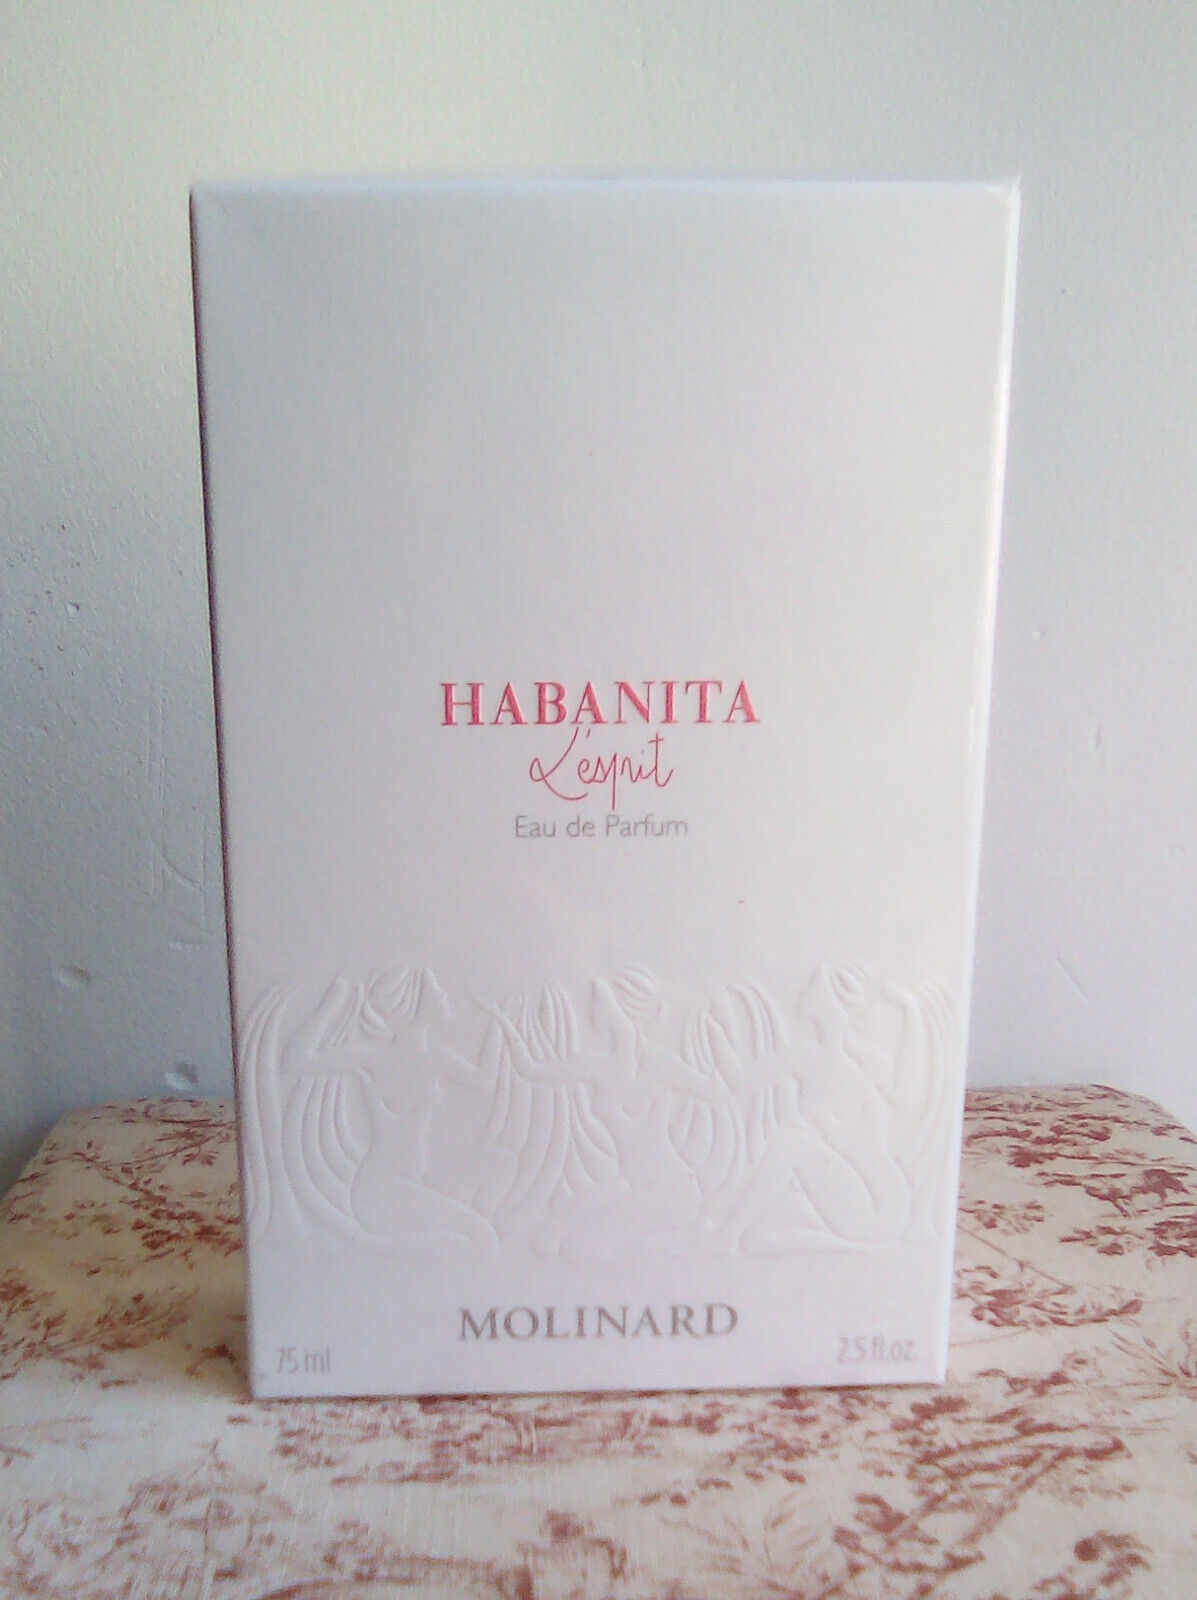 Habanîta L'esprît - Molînard - eau de parfum 75ml new blister